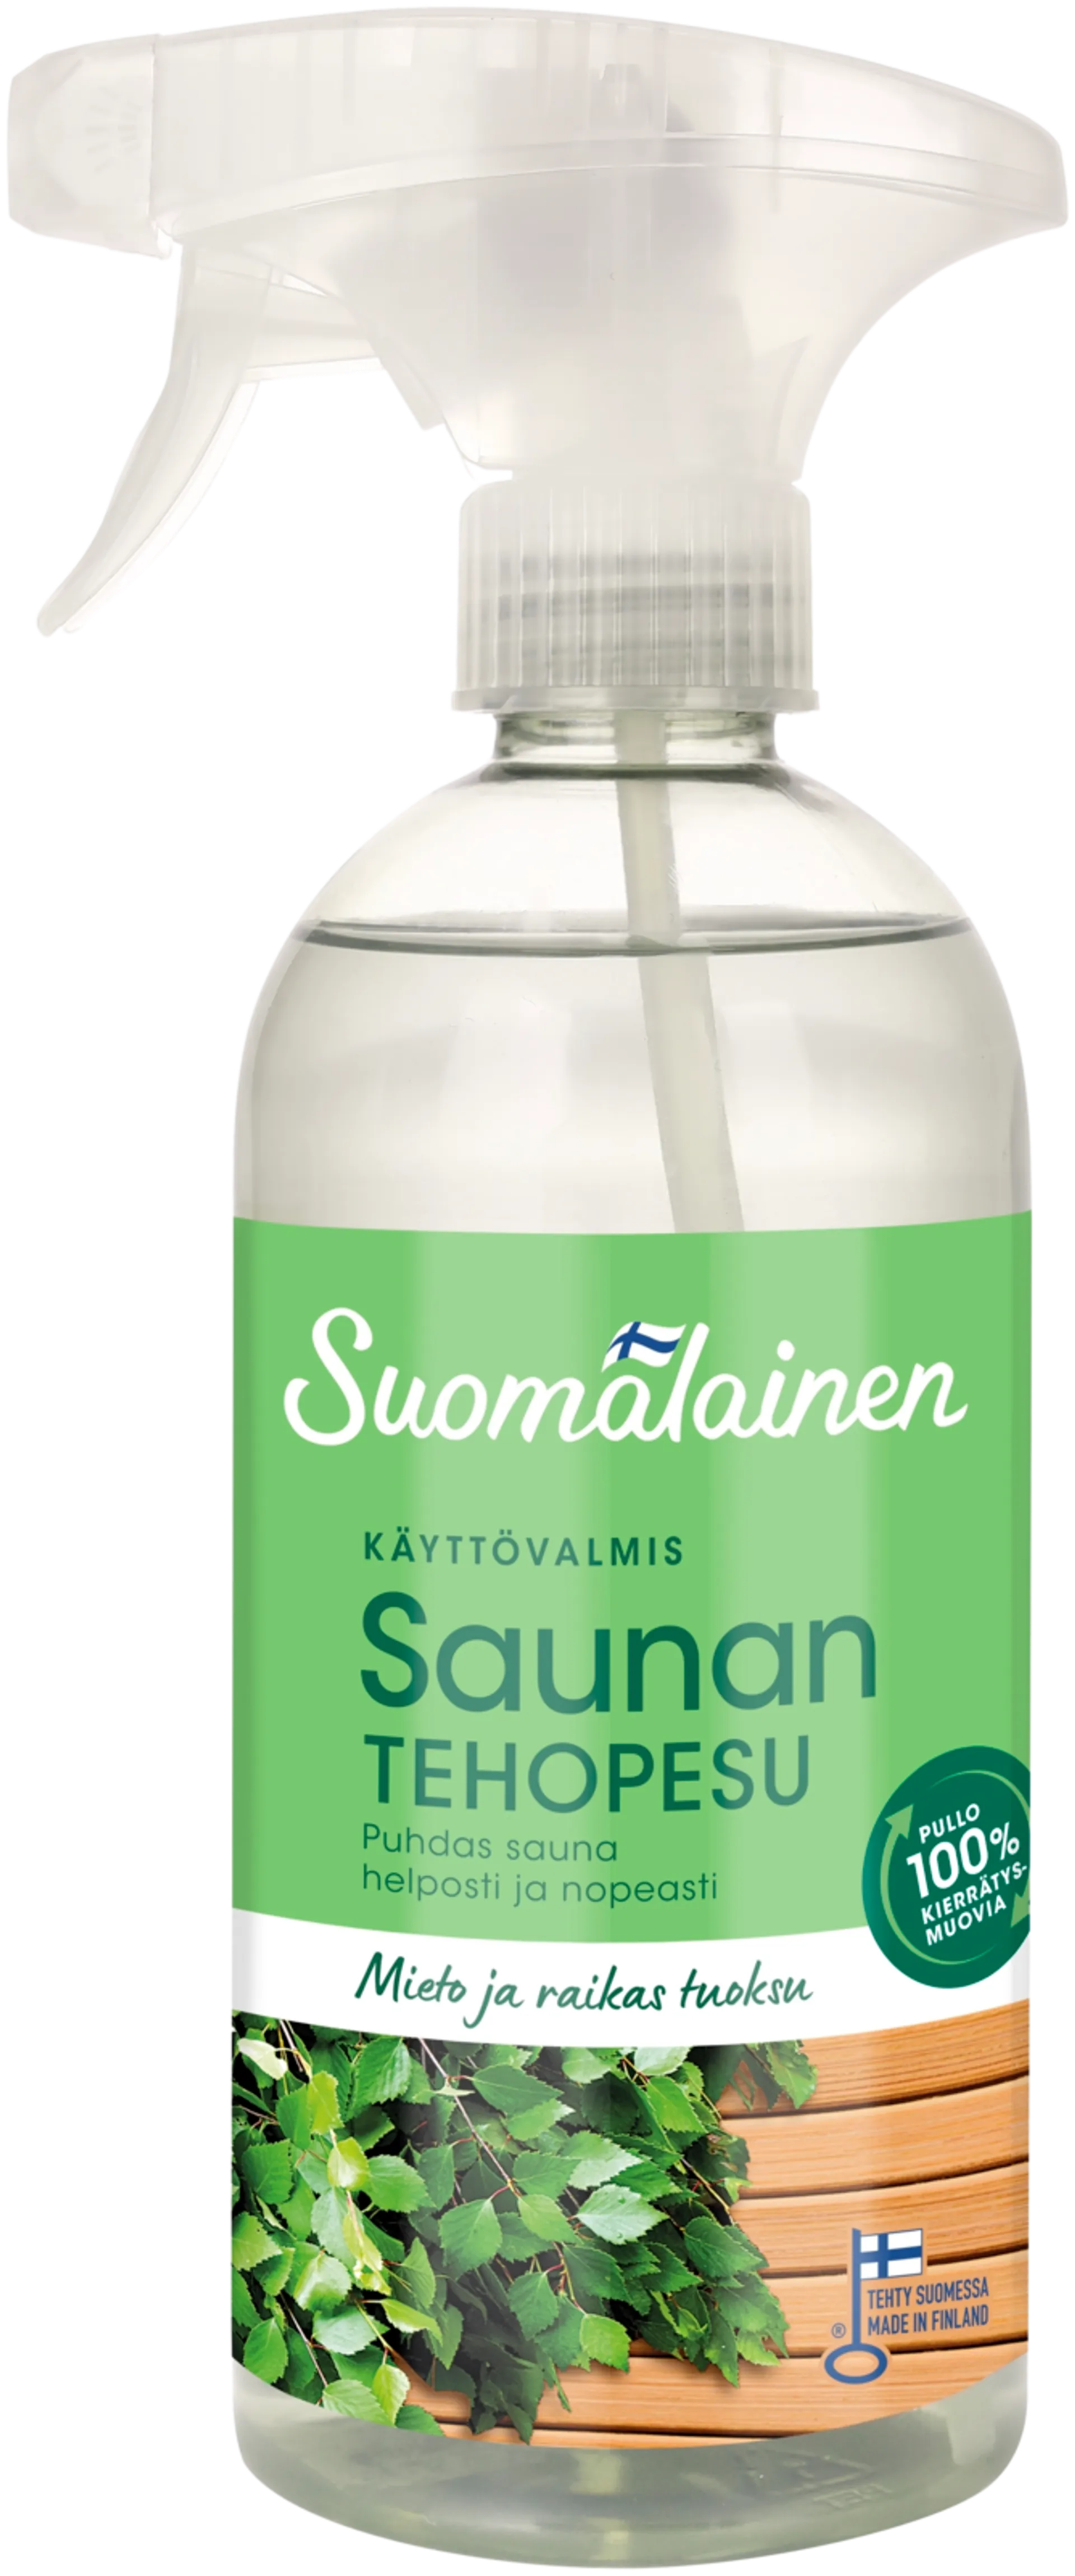 Suomalainen Saunan Tehopesu-suihke 500ml